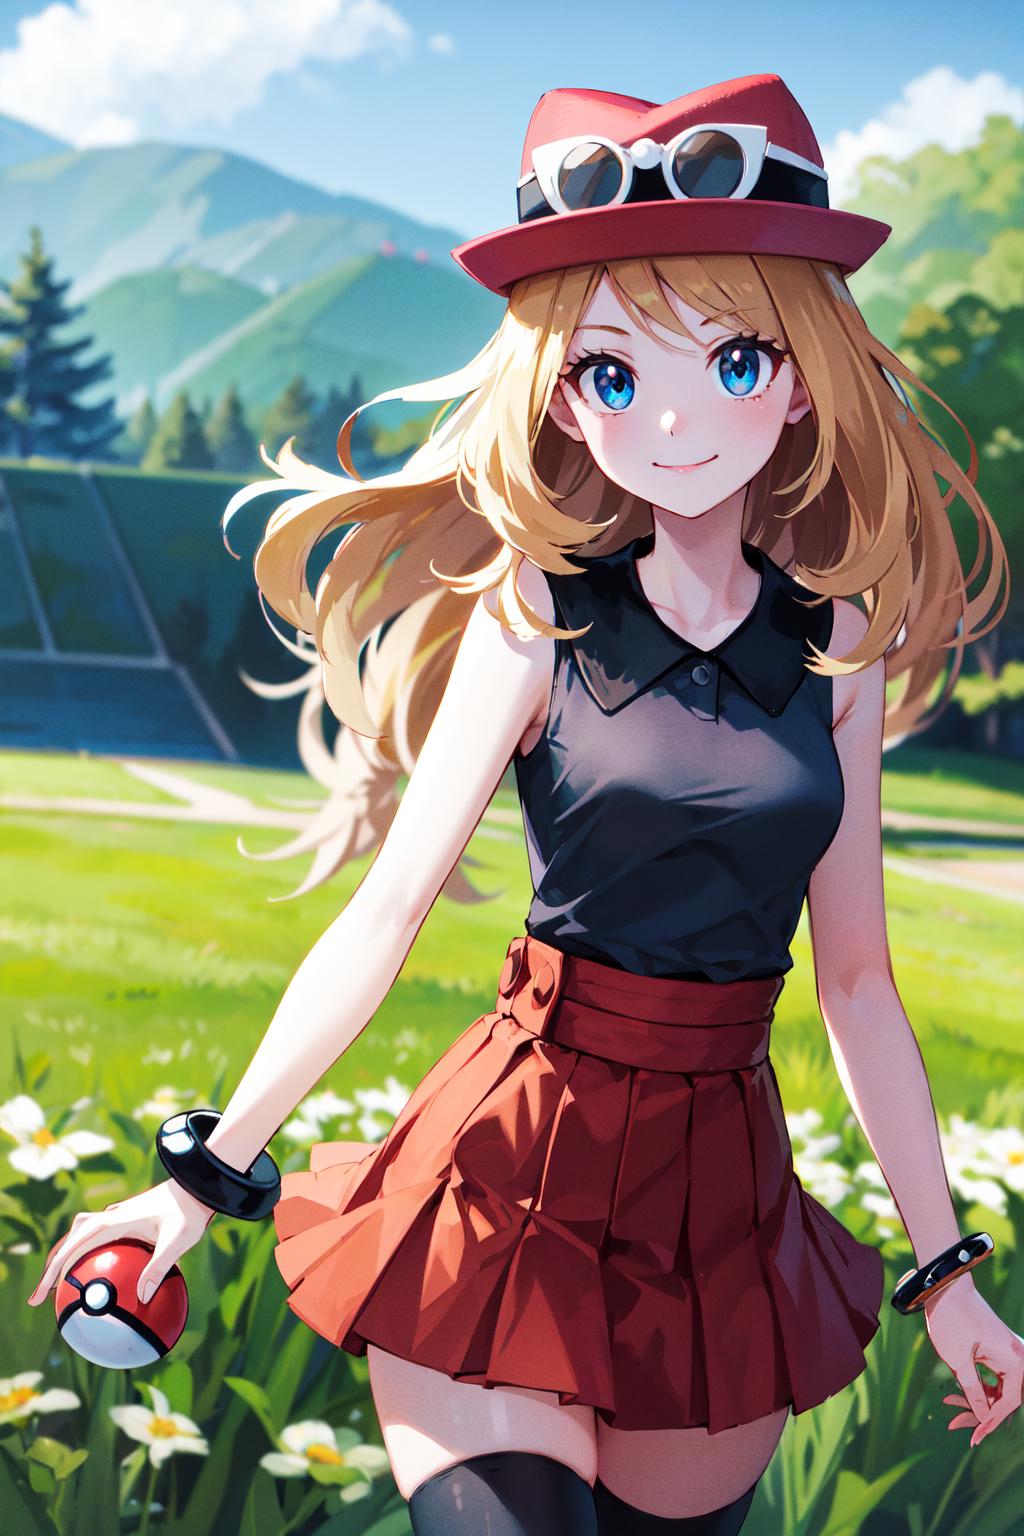 Serena セレナ / Pokemon image by h_madoka